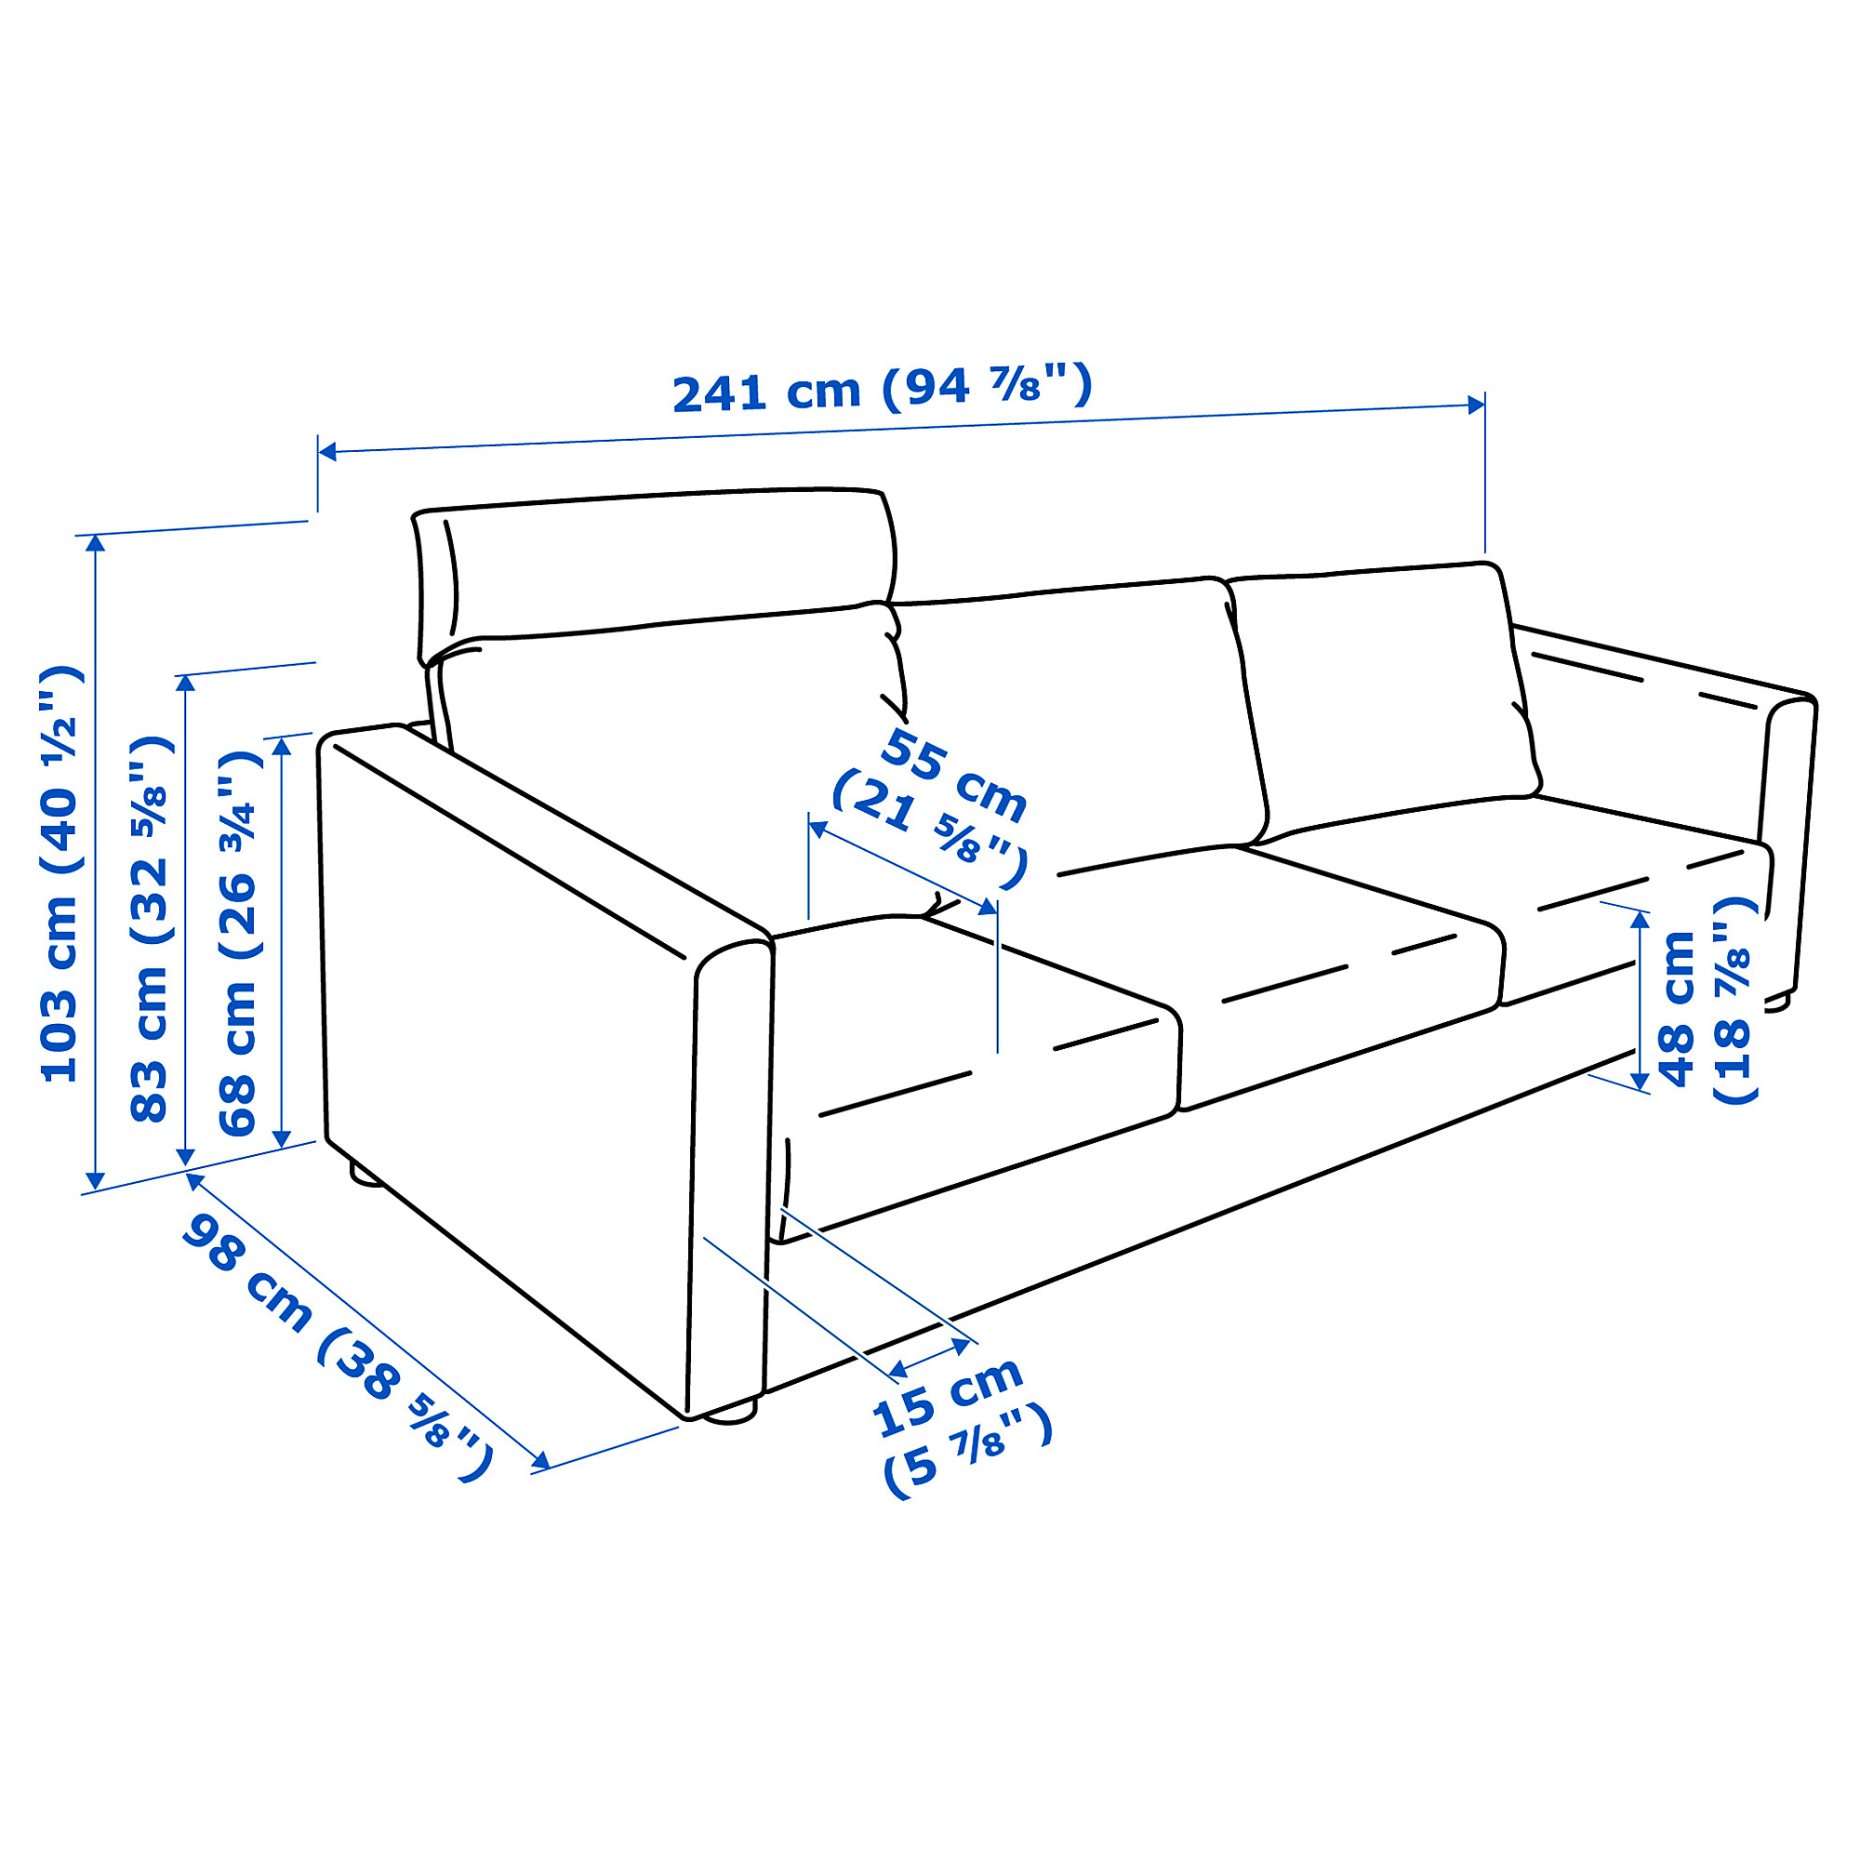 VIMLE, 3-seat sofa with headrest, 093.990.24